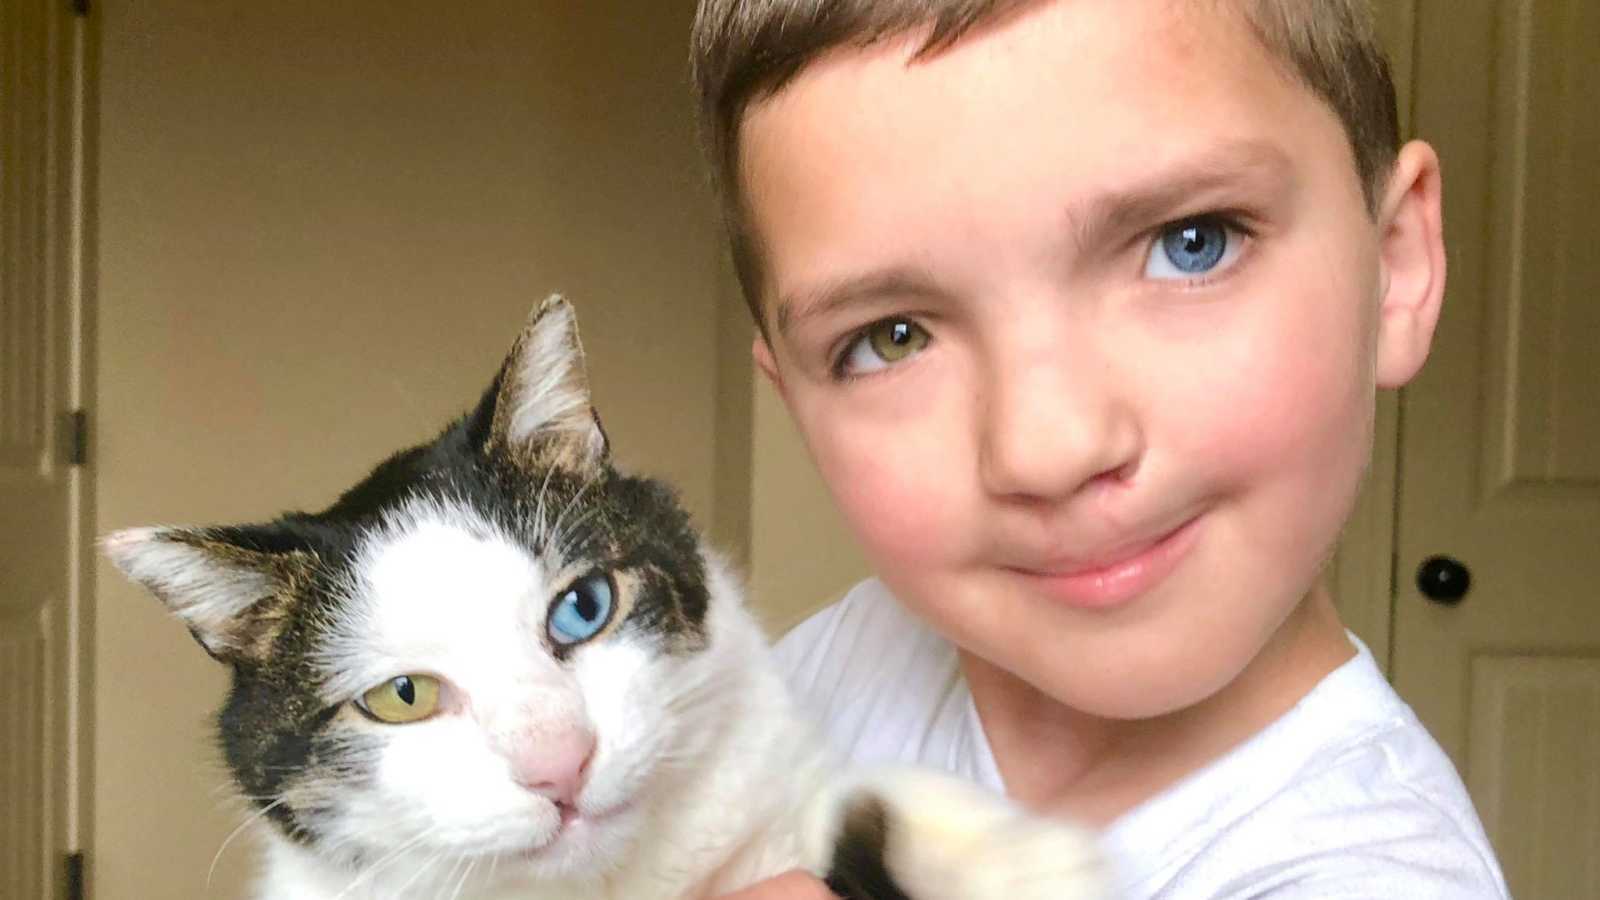 Little boy with heterochromia iridum holding cat